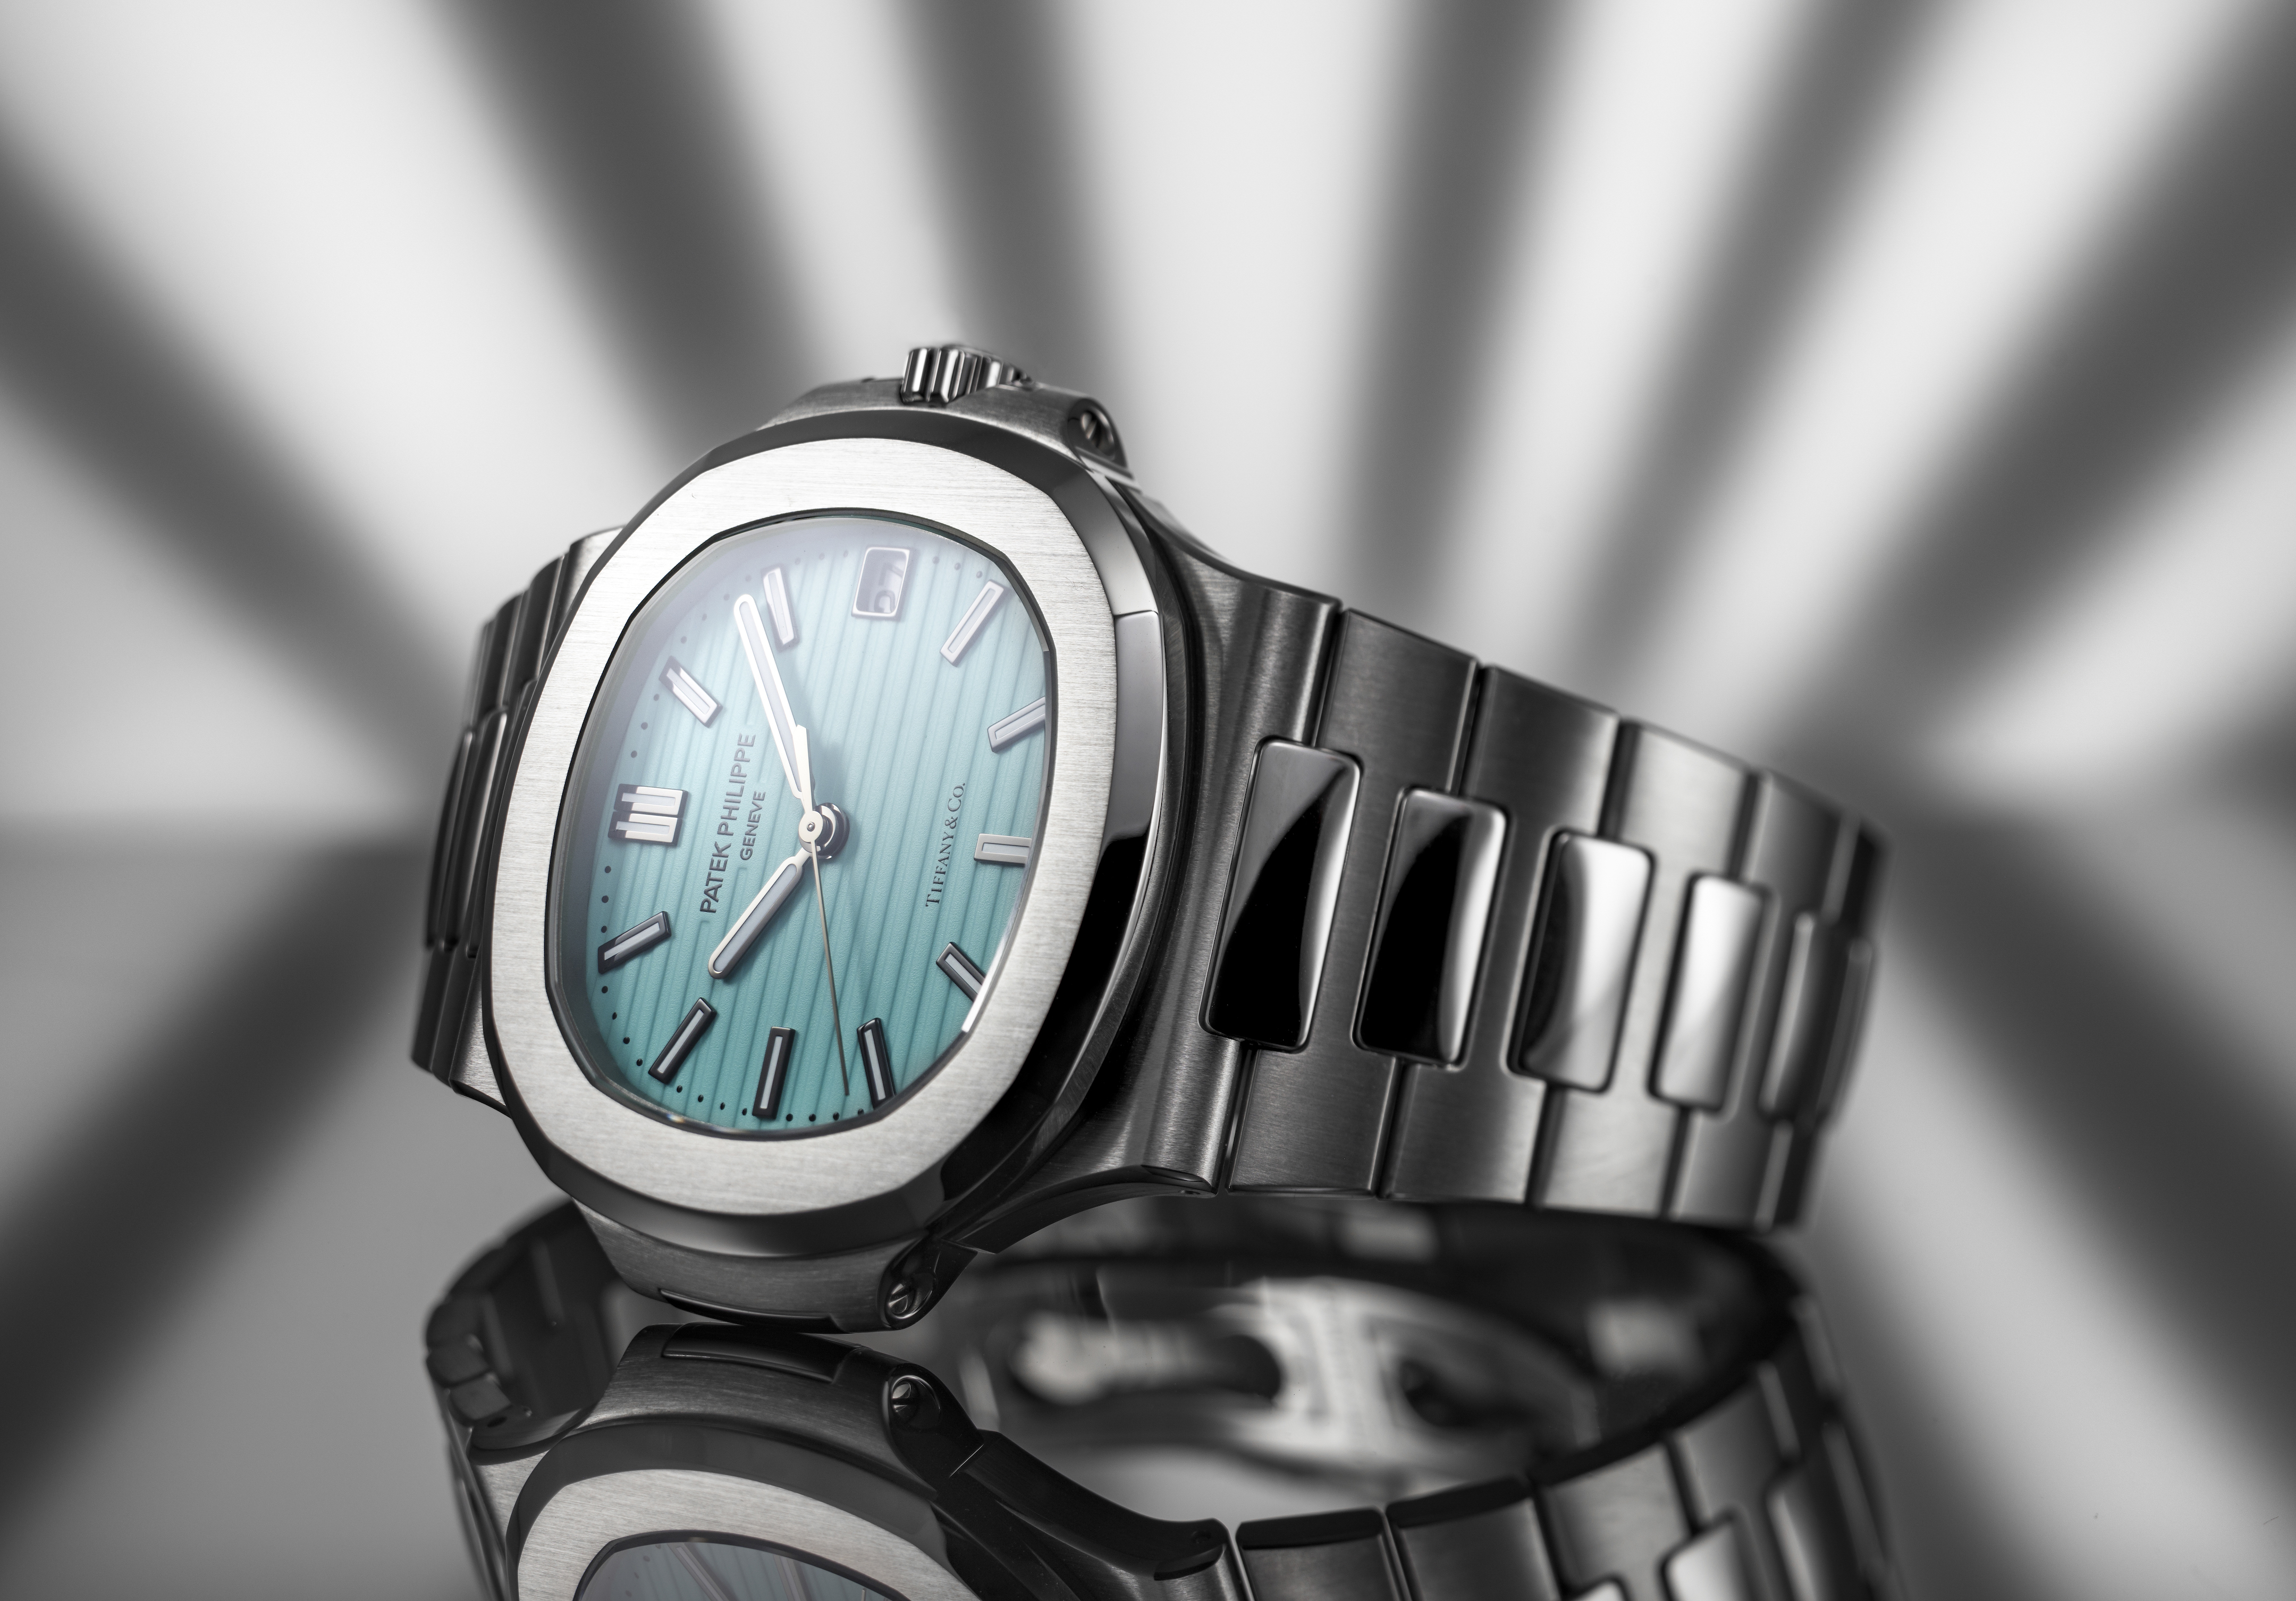 WTS] Mido Oceanstar GMT Hodinkee LE full kit + additional bracelet :  r/Watchexchange